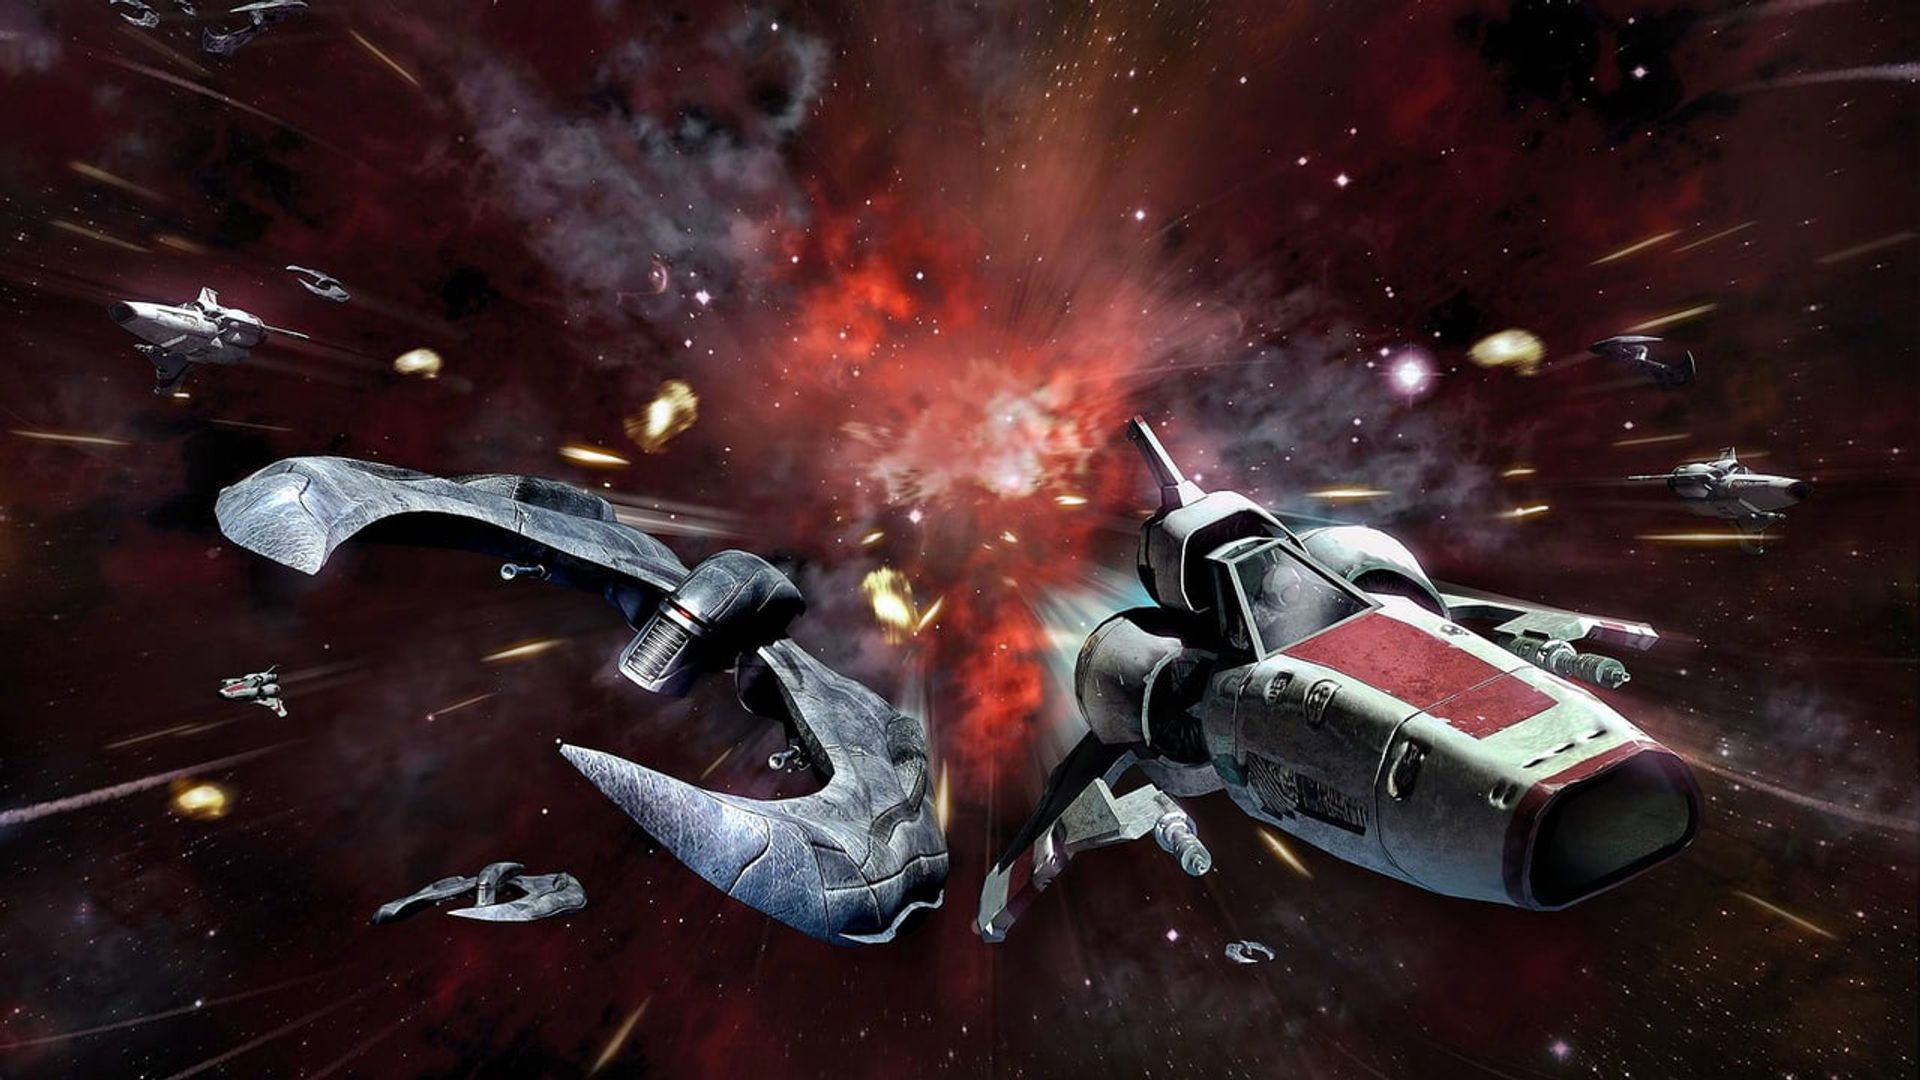 Battlestar Galactica: Razor Flashbacks background